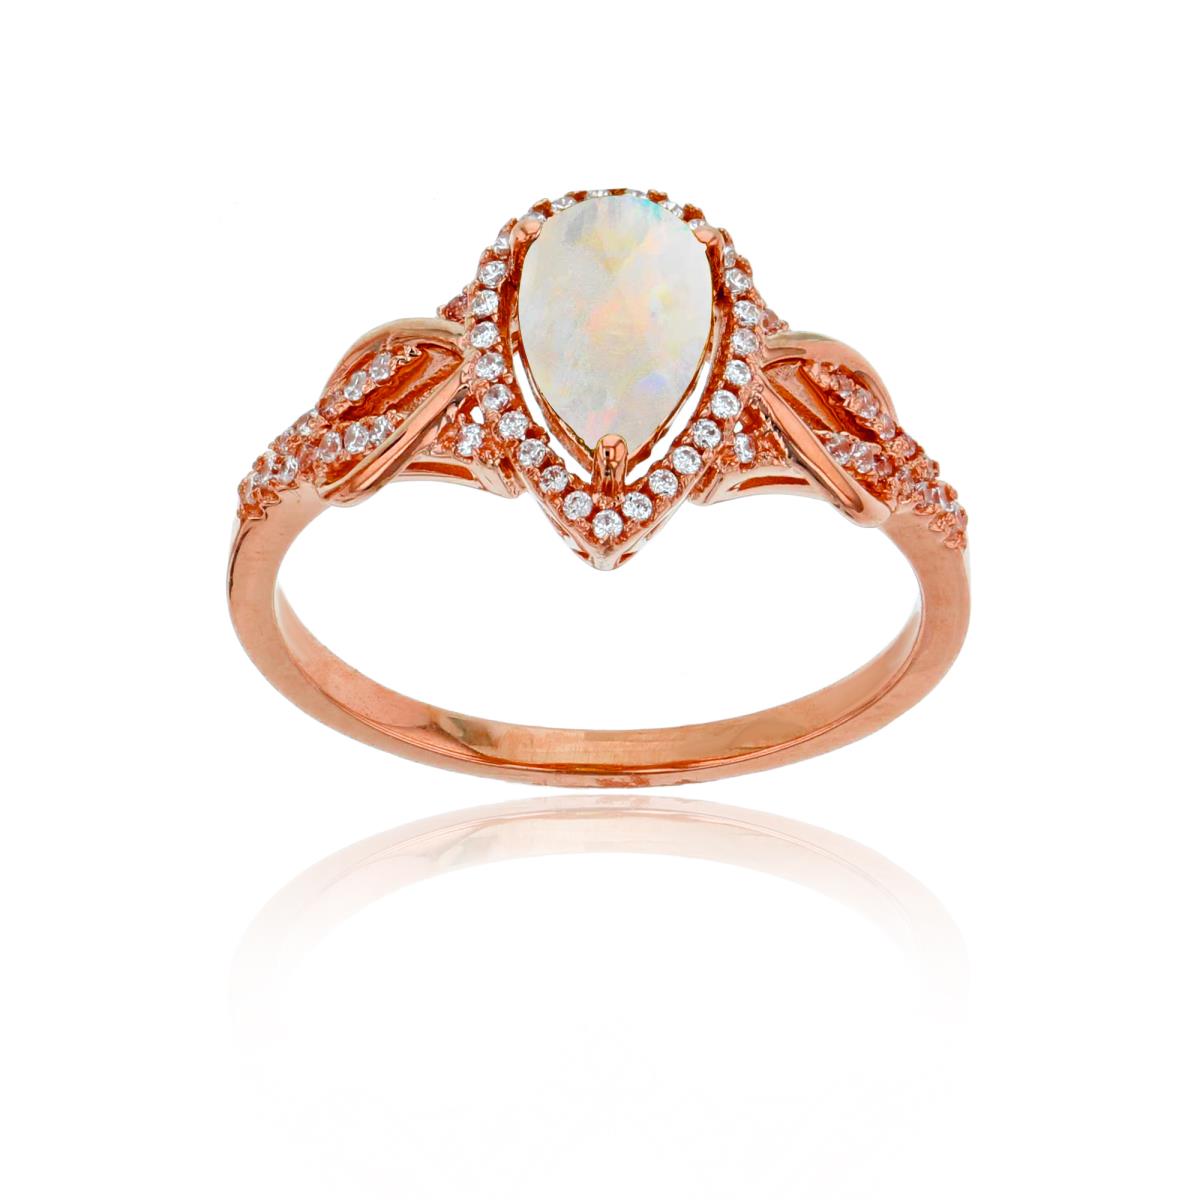 14K Rose Gold 0.17CTTW Rnd Diamond & 8x5mm Pear Cut Opal Knot Sides Ring